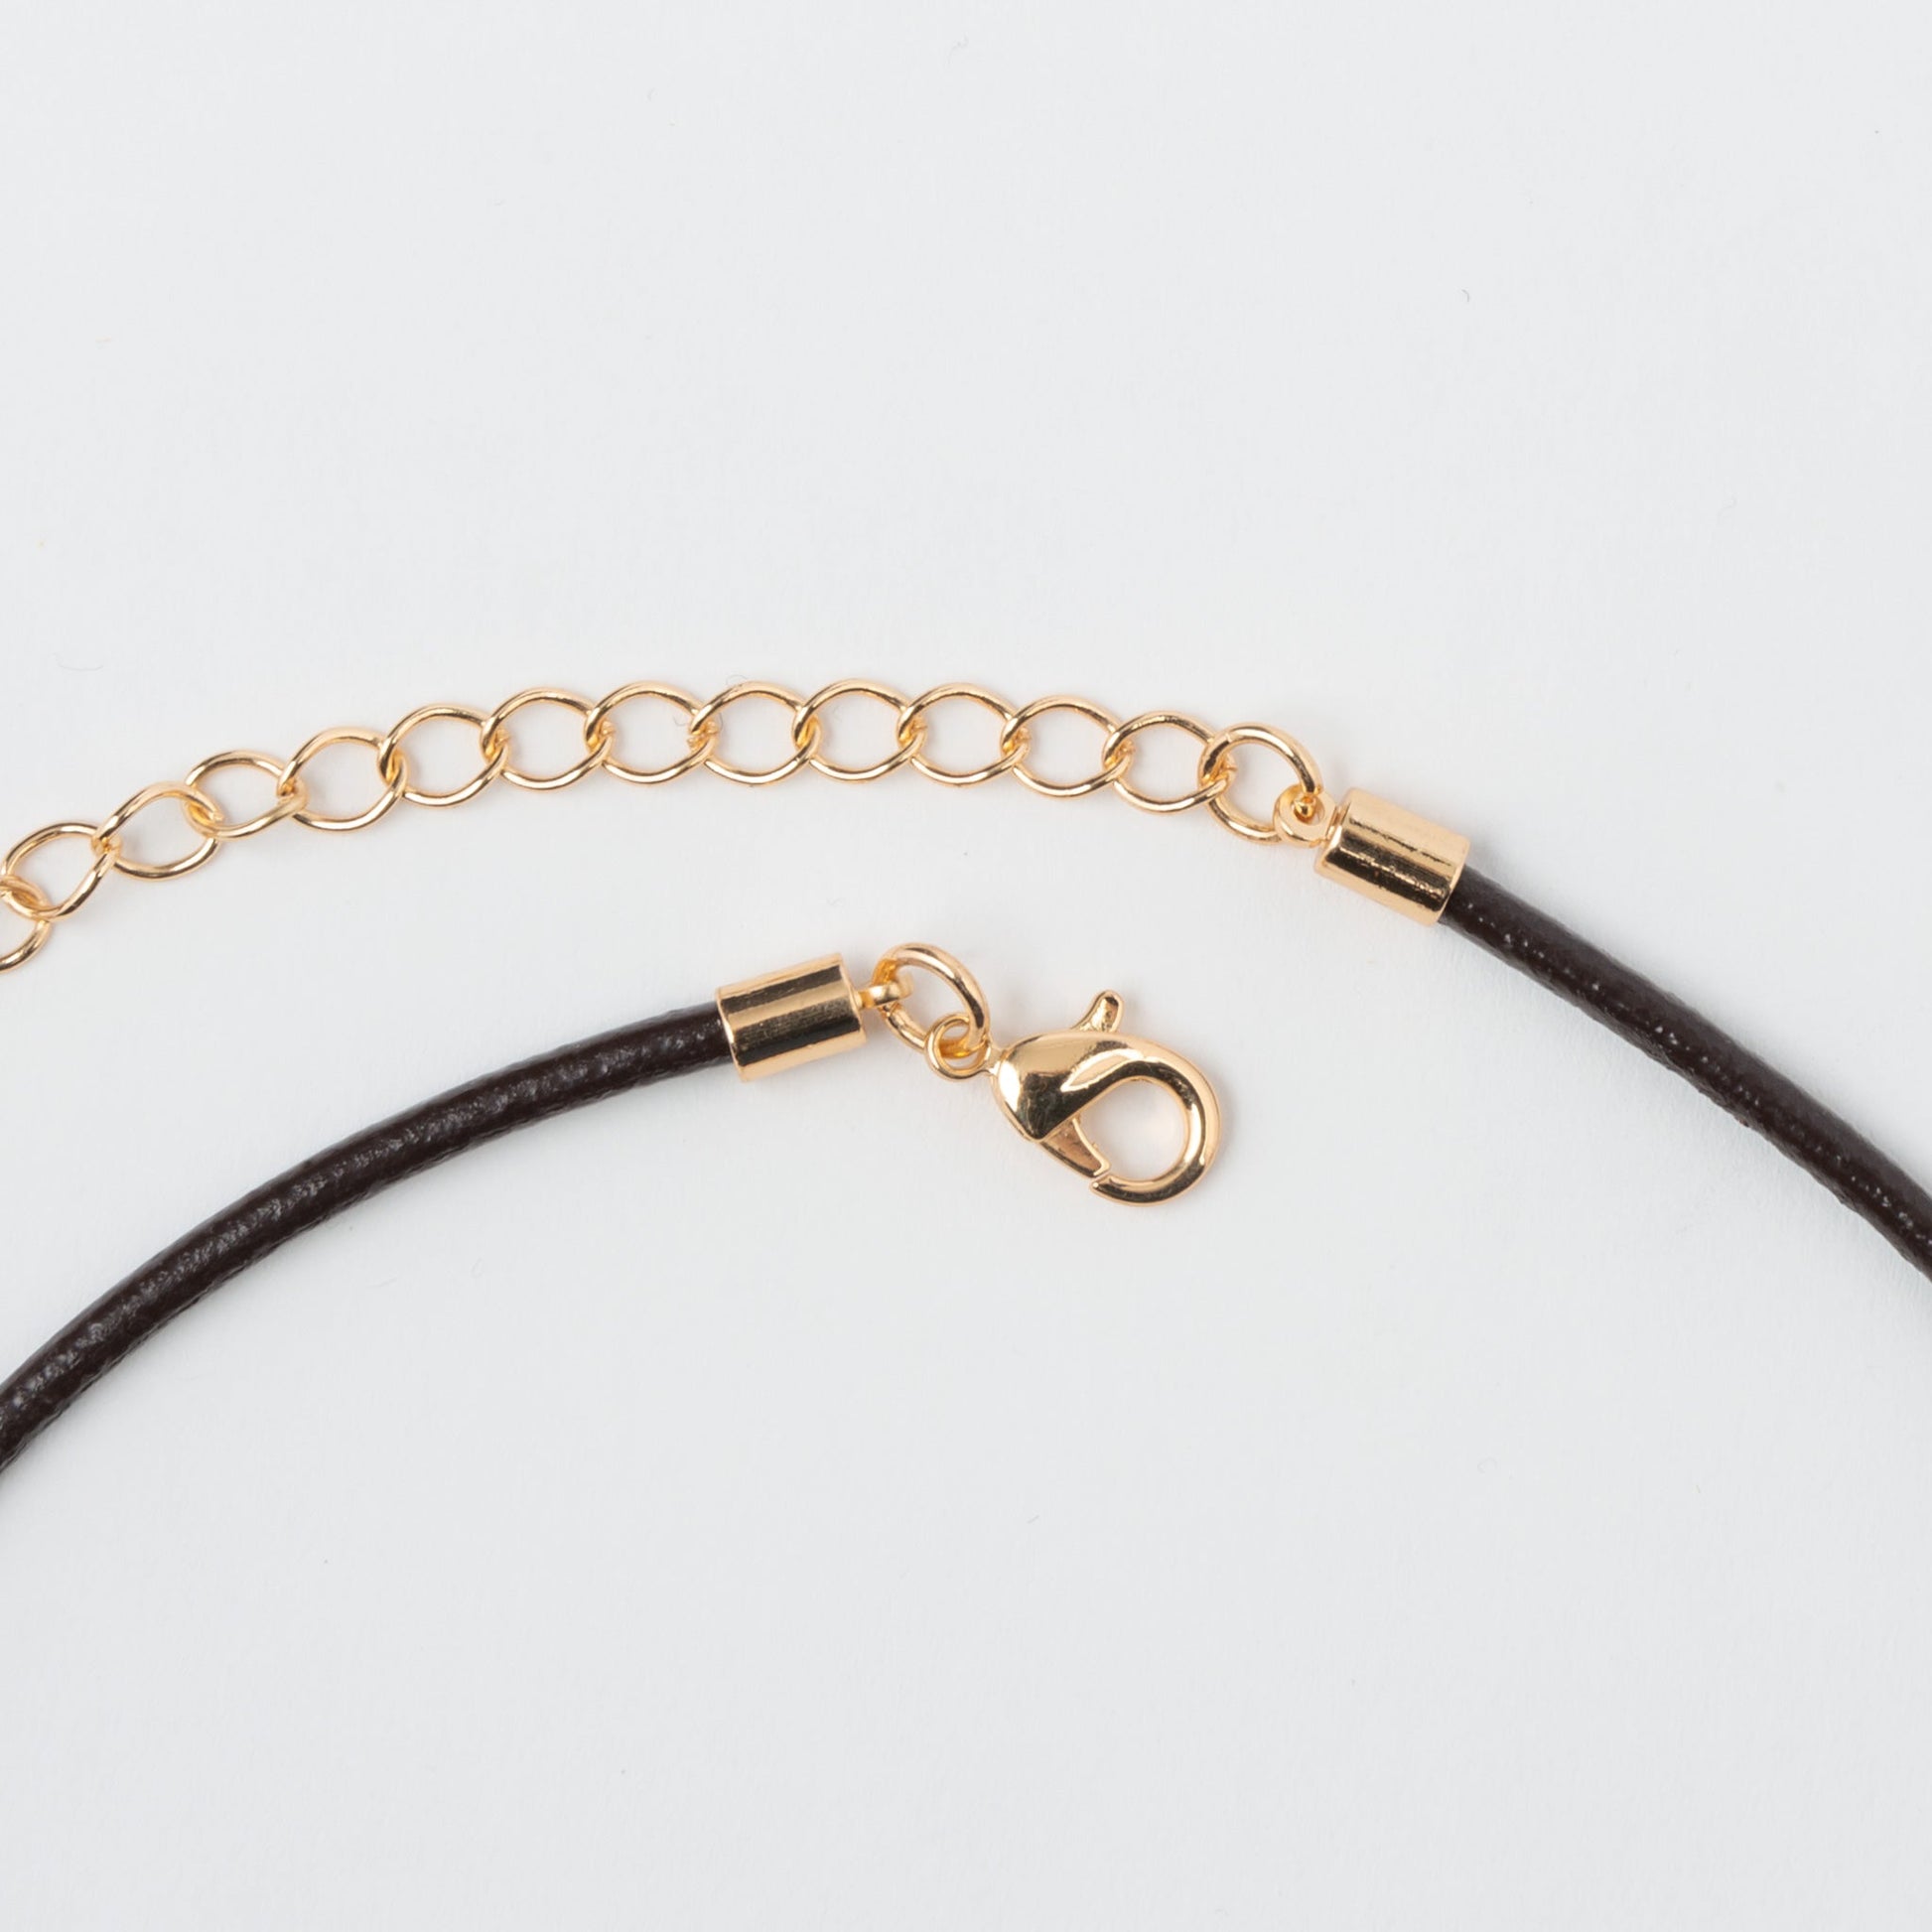 Brinley Curled Metal Necklace